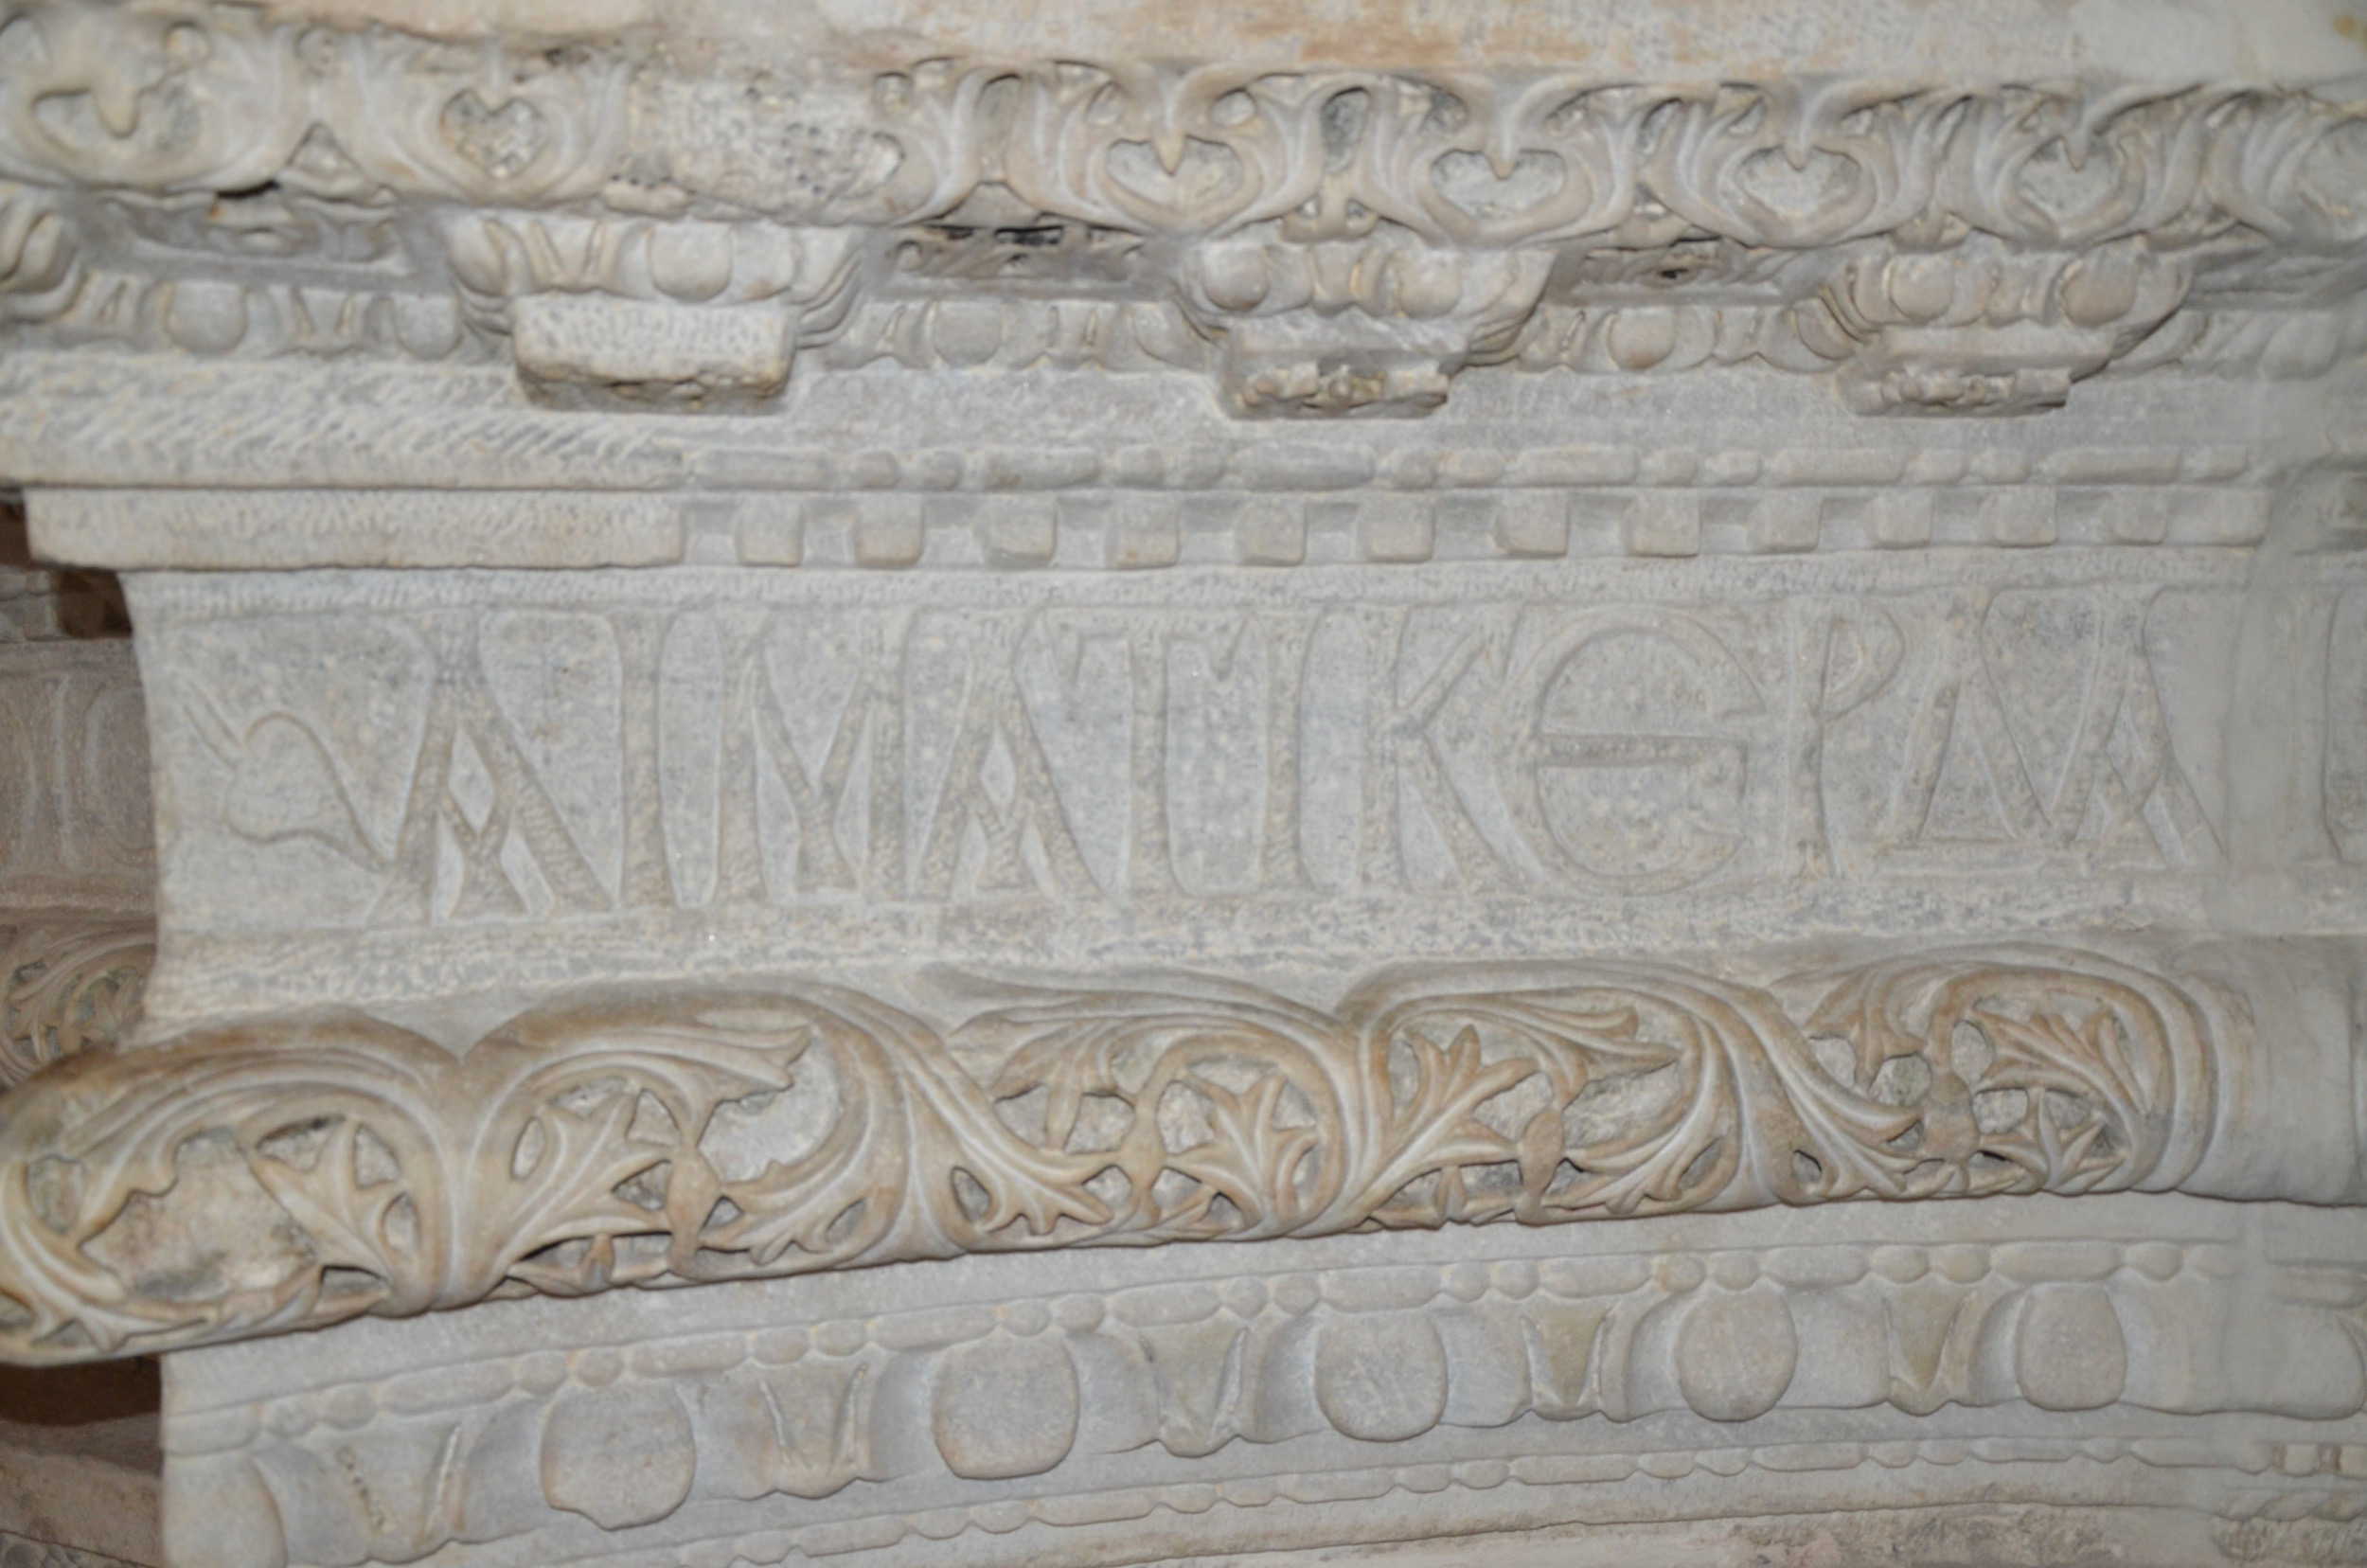 Greek inscription at the Little Hagia Sophia Mosque in Istanbul, Turkey